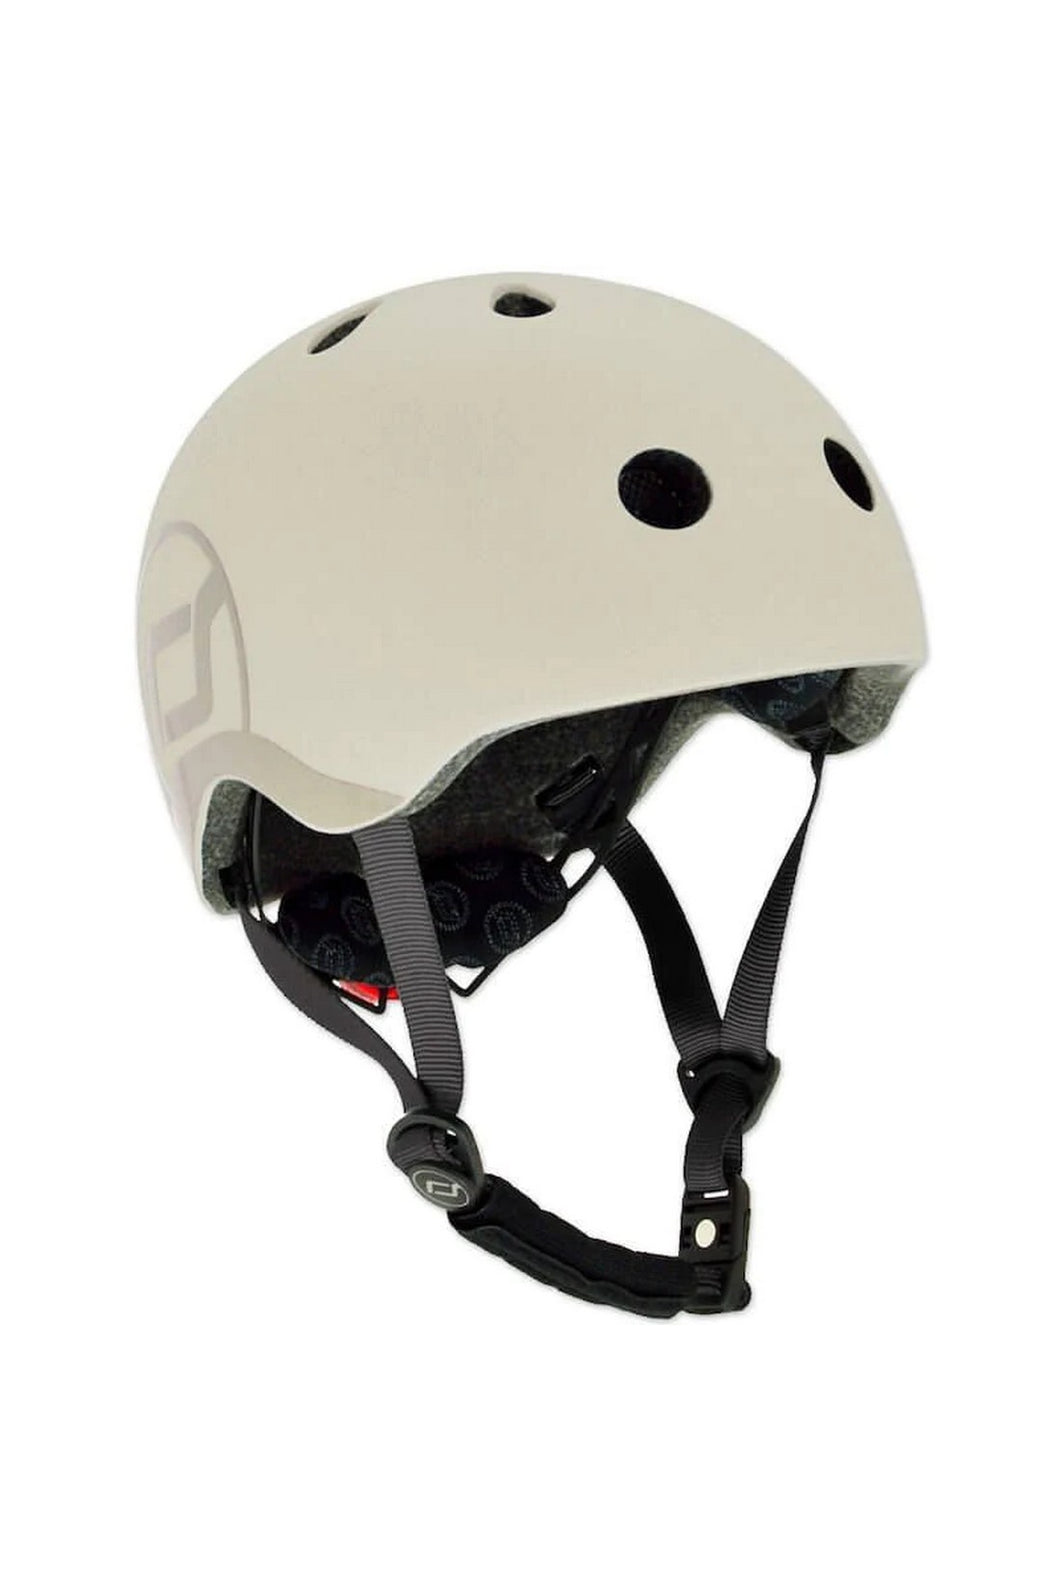 Scoot & Ride Led Helmet S-M (51-56 cm)